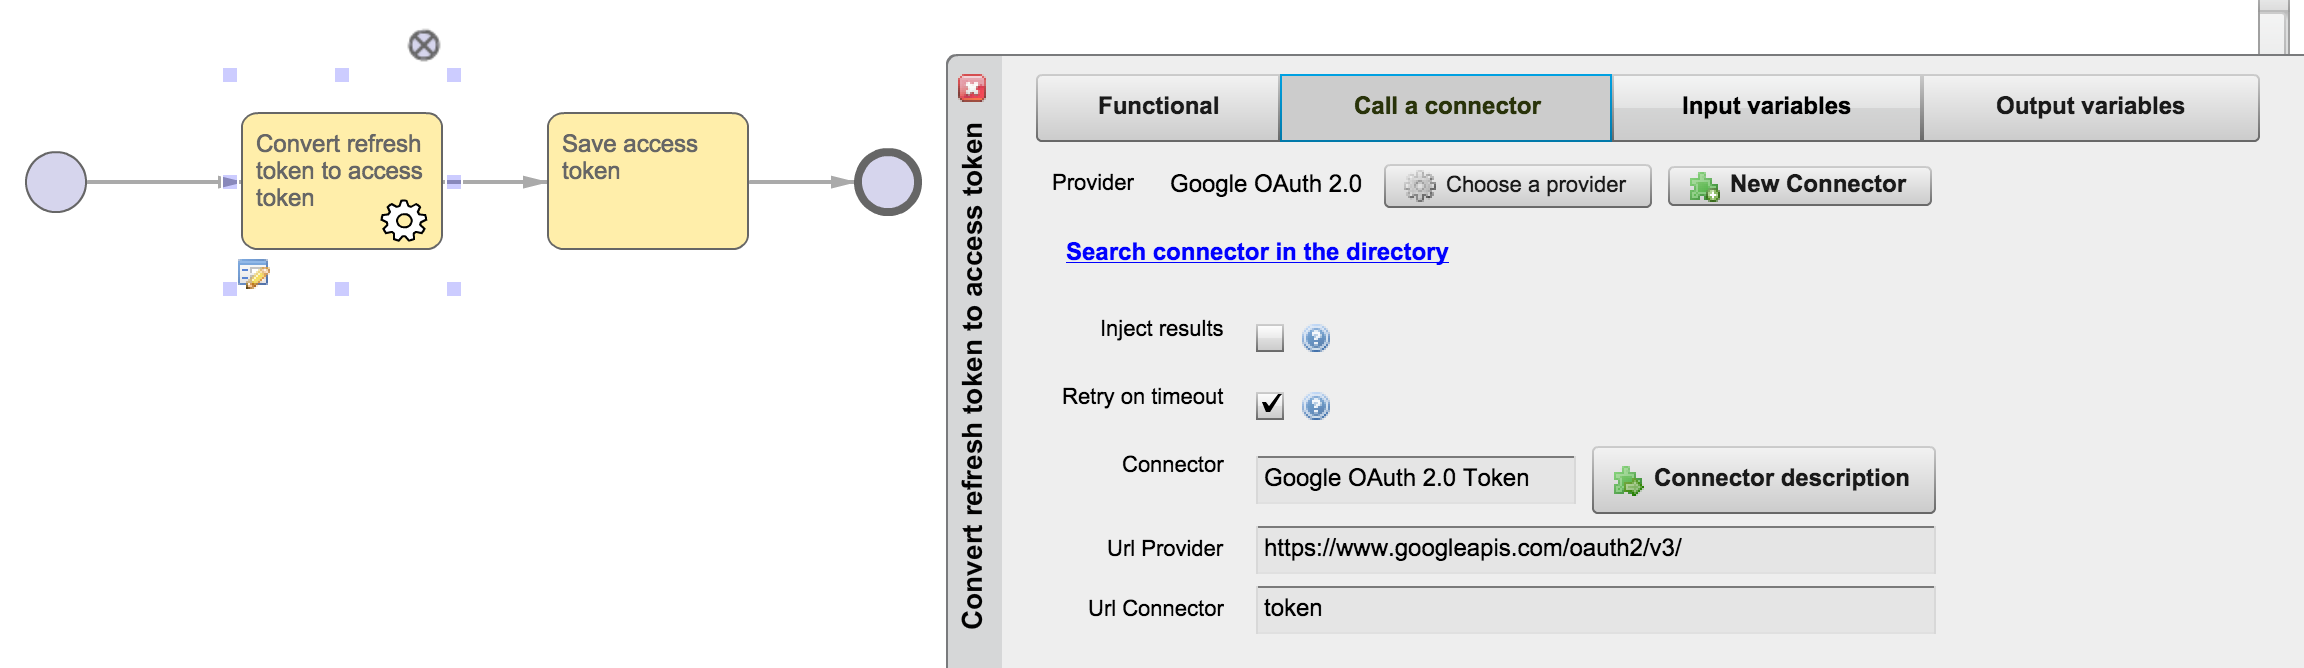 Google OAuth 2.0 Refresh Token CAPI Design 1